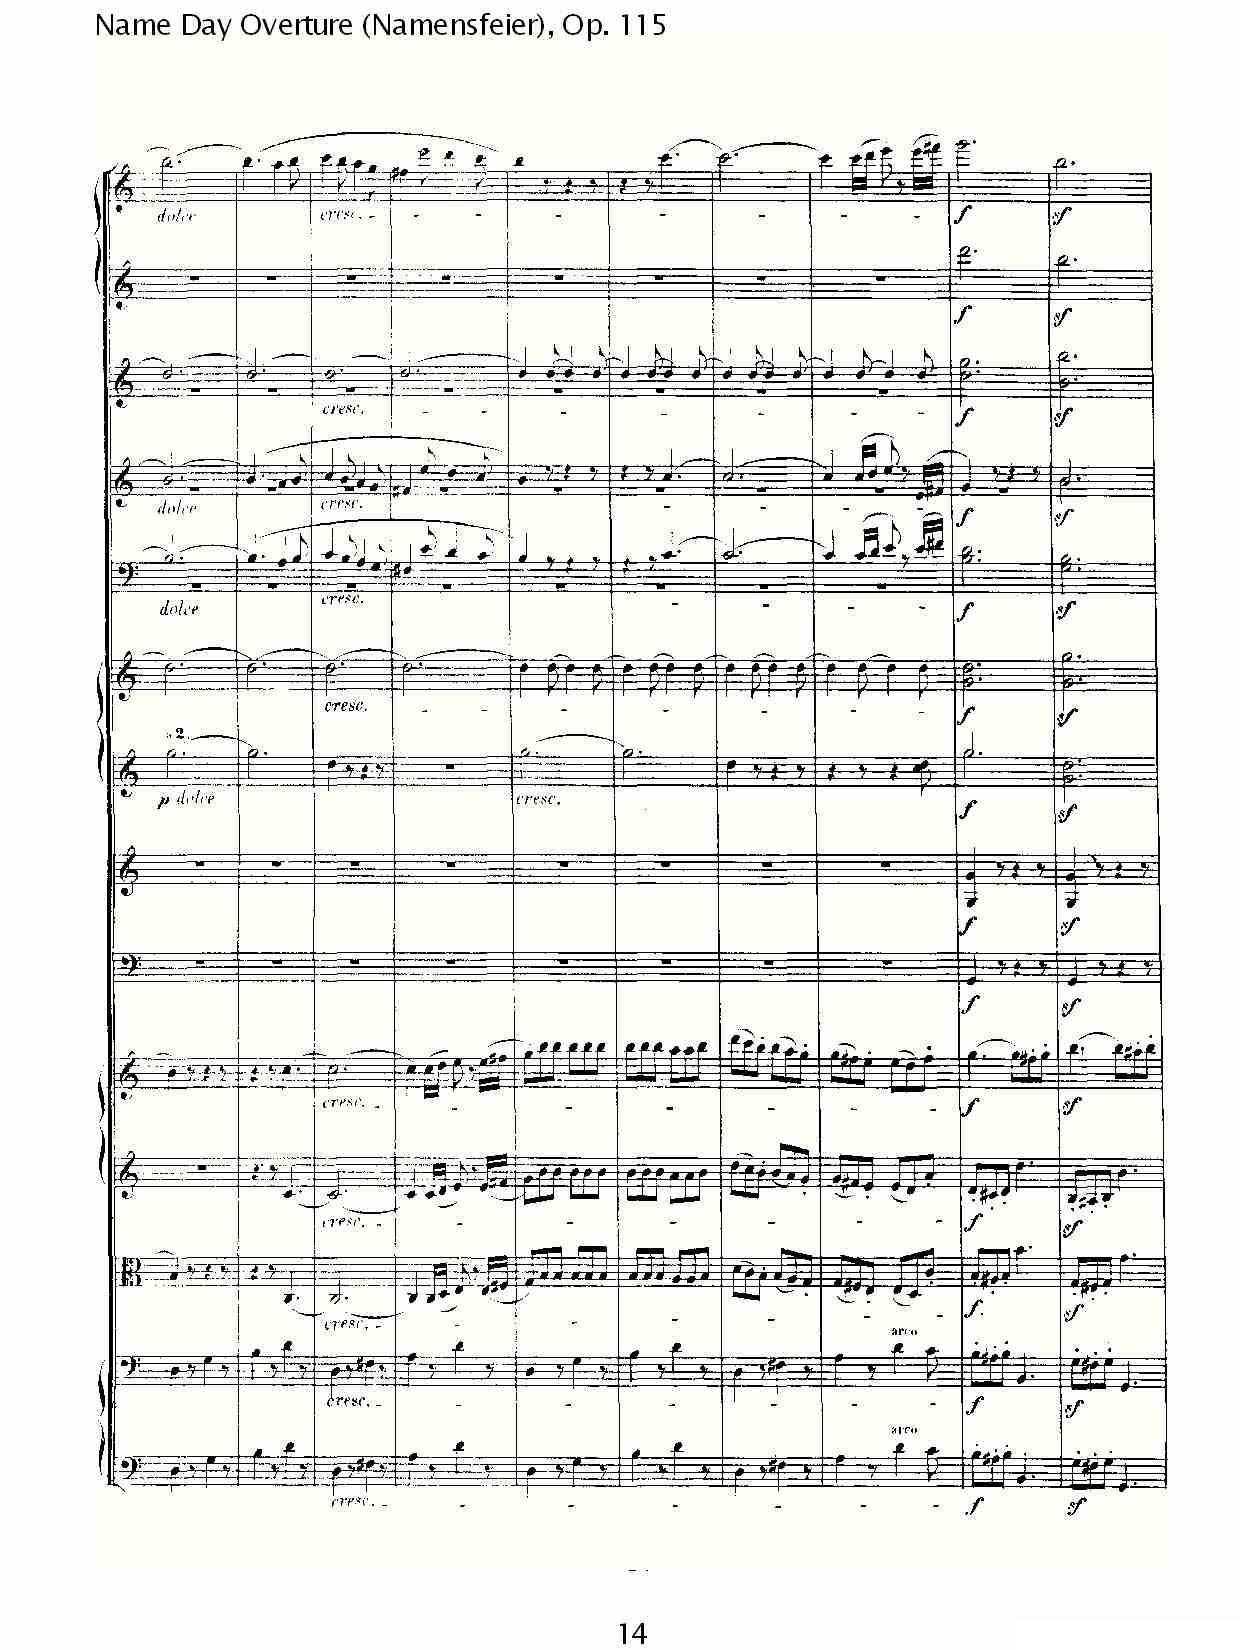 Name Day Overture（Namensfeier)，Op.11）其它曲谱（图14）